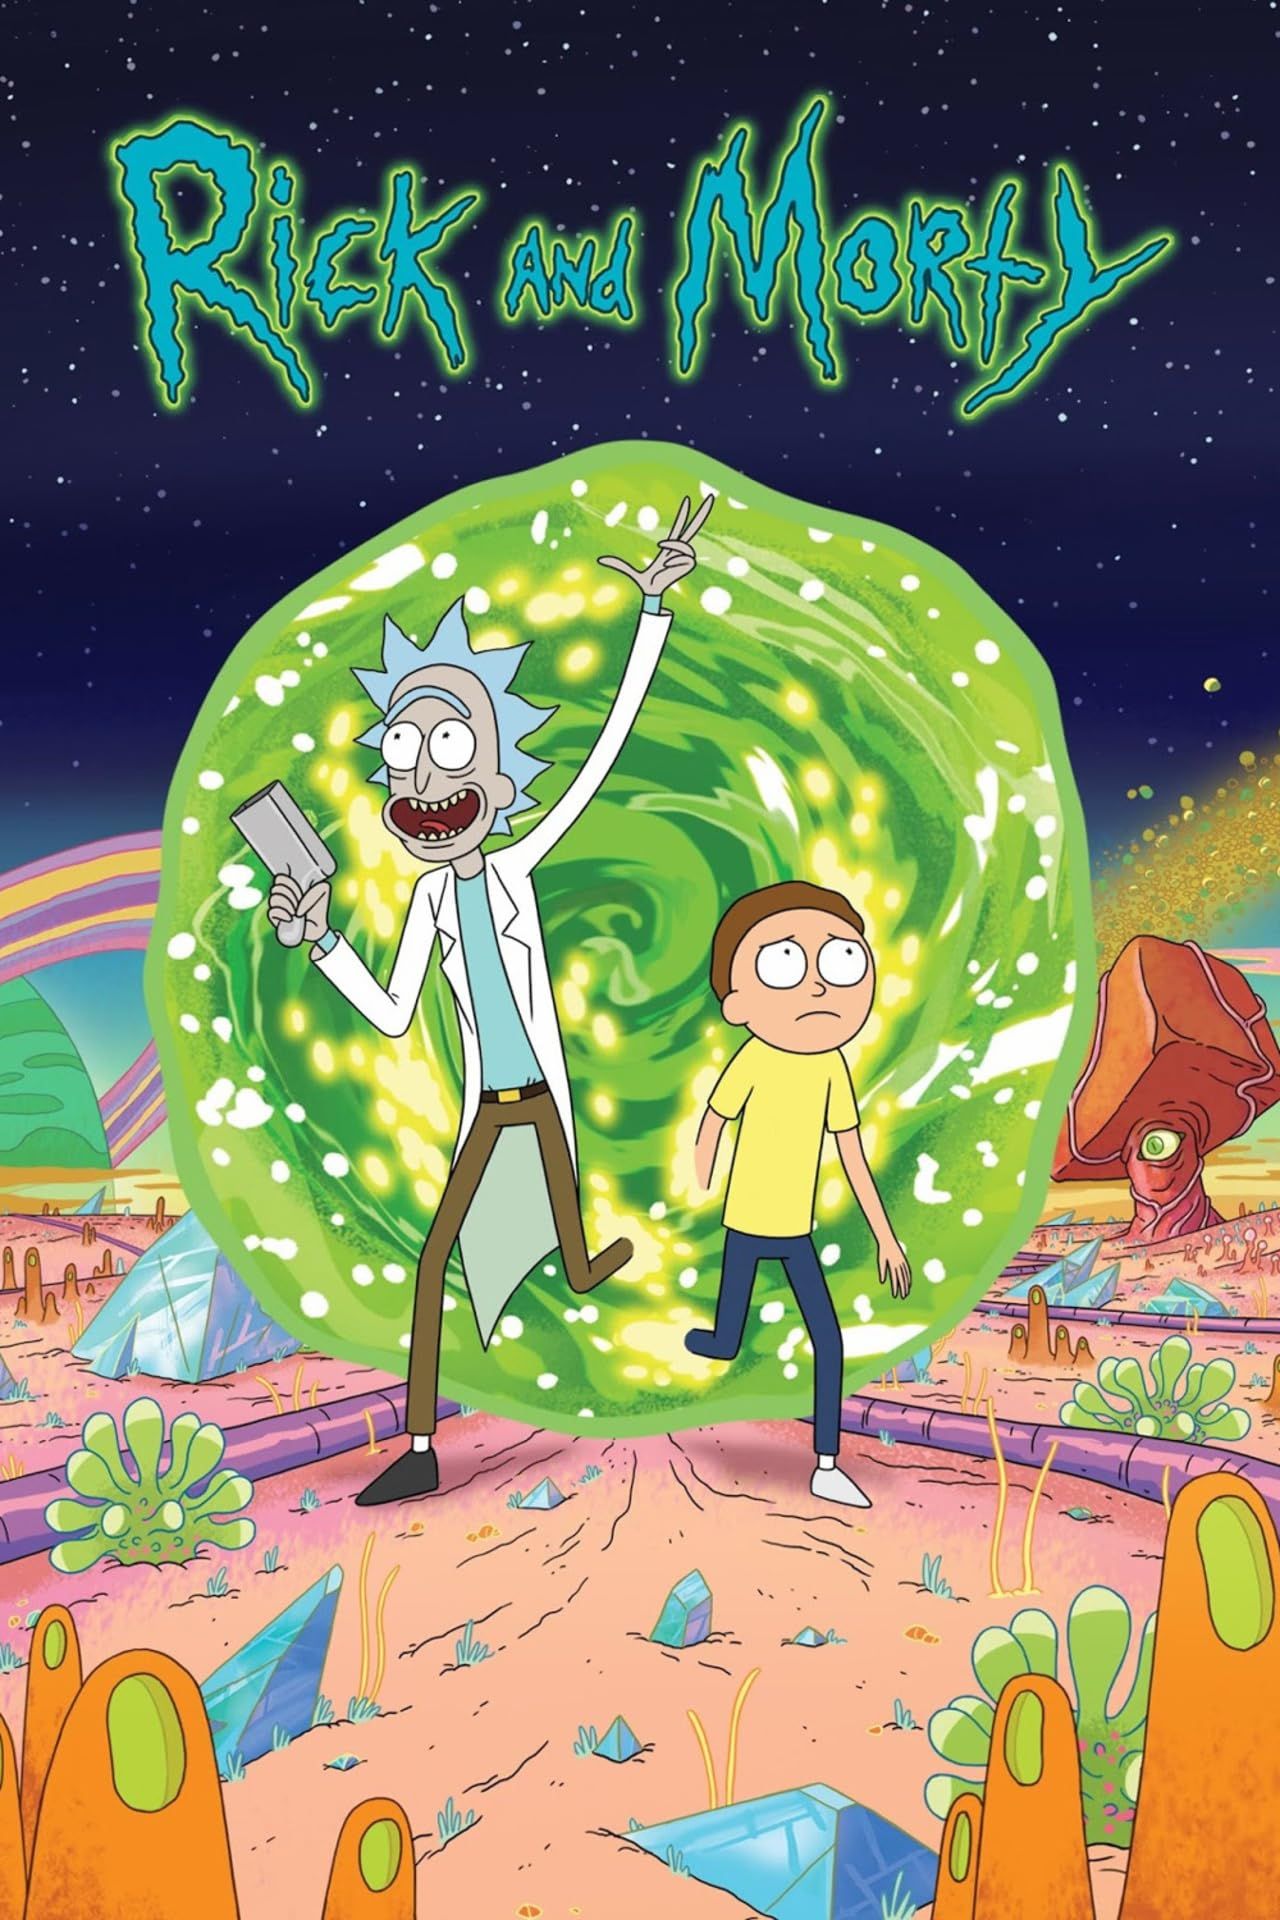 Rick and Morty (Season 6) English Netflix Series HDRip 720p 480p